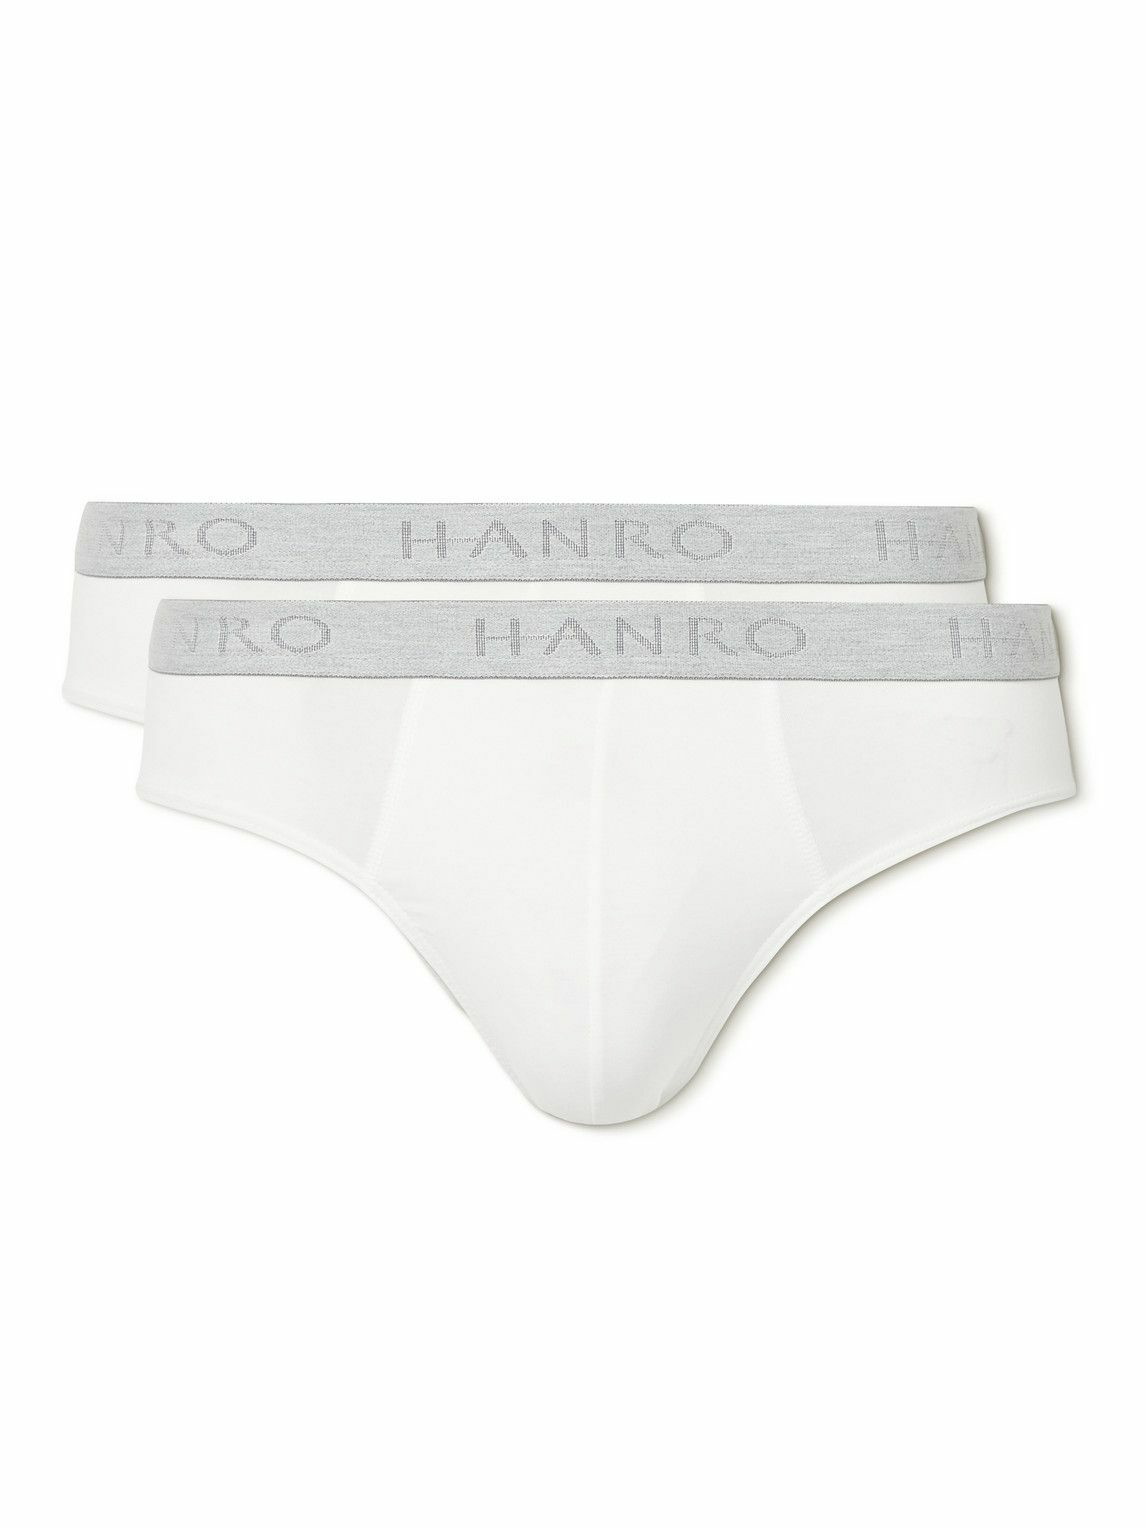 HANRO Essentials Two-Pack Stretch-Cotton Boxer Briefs for Men